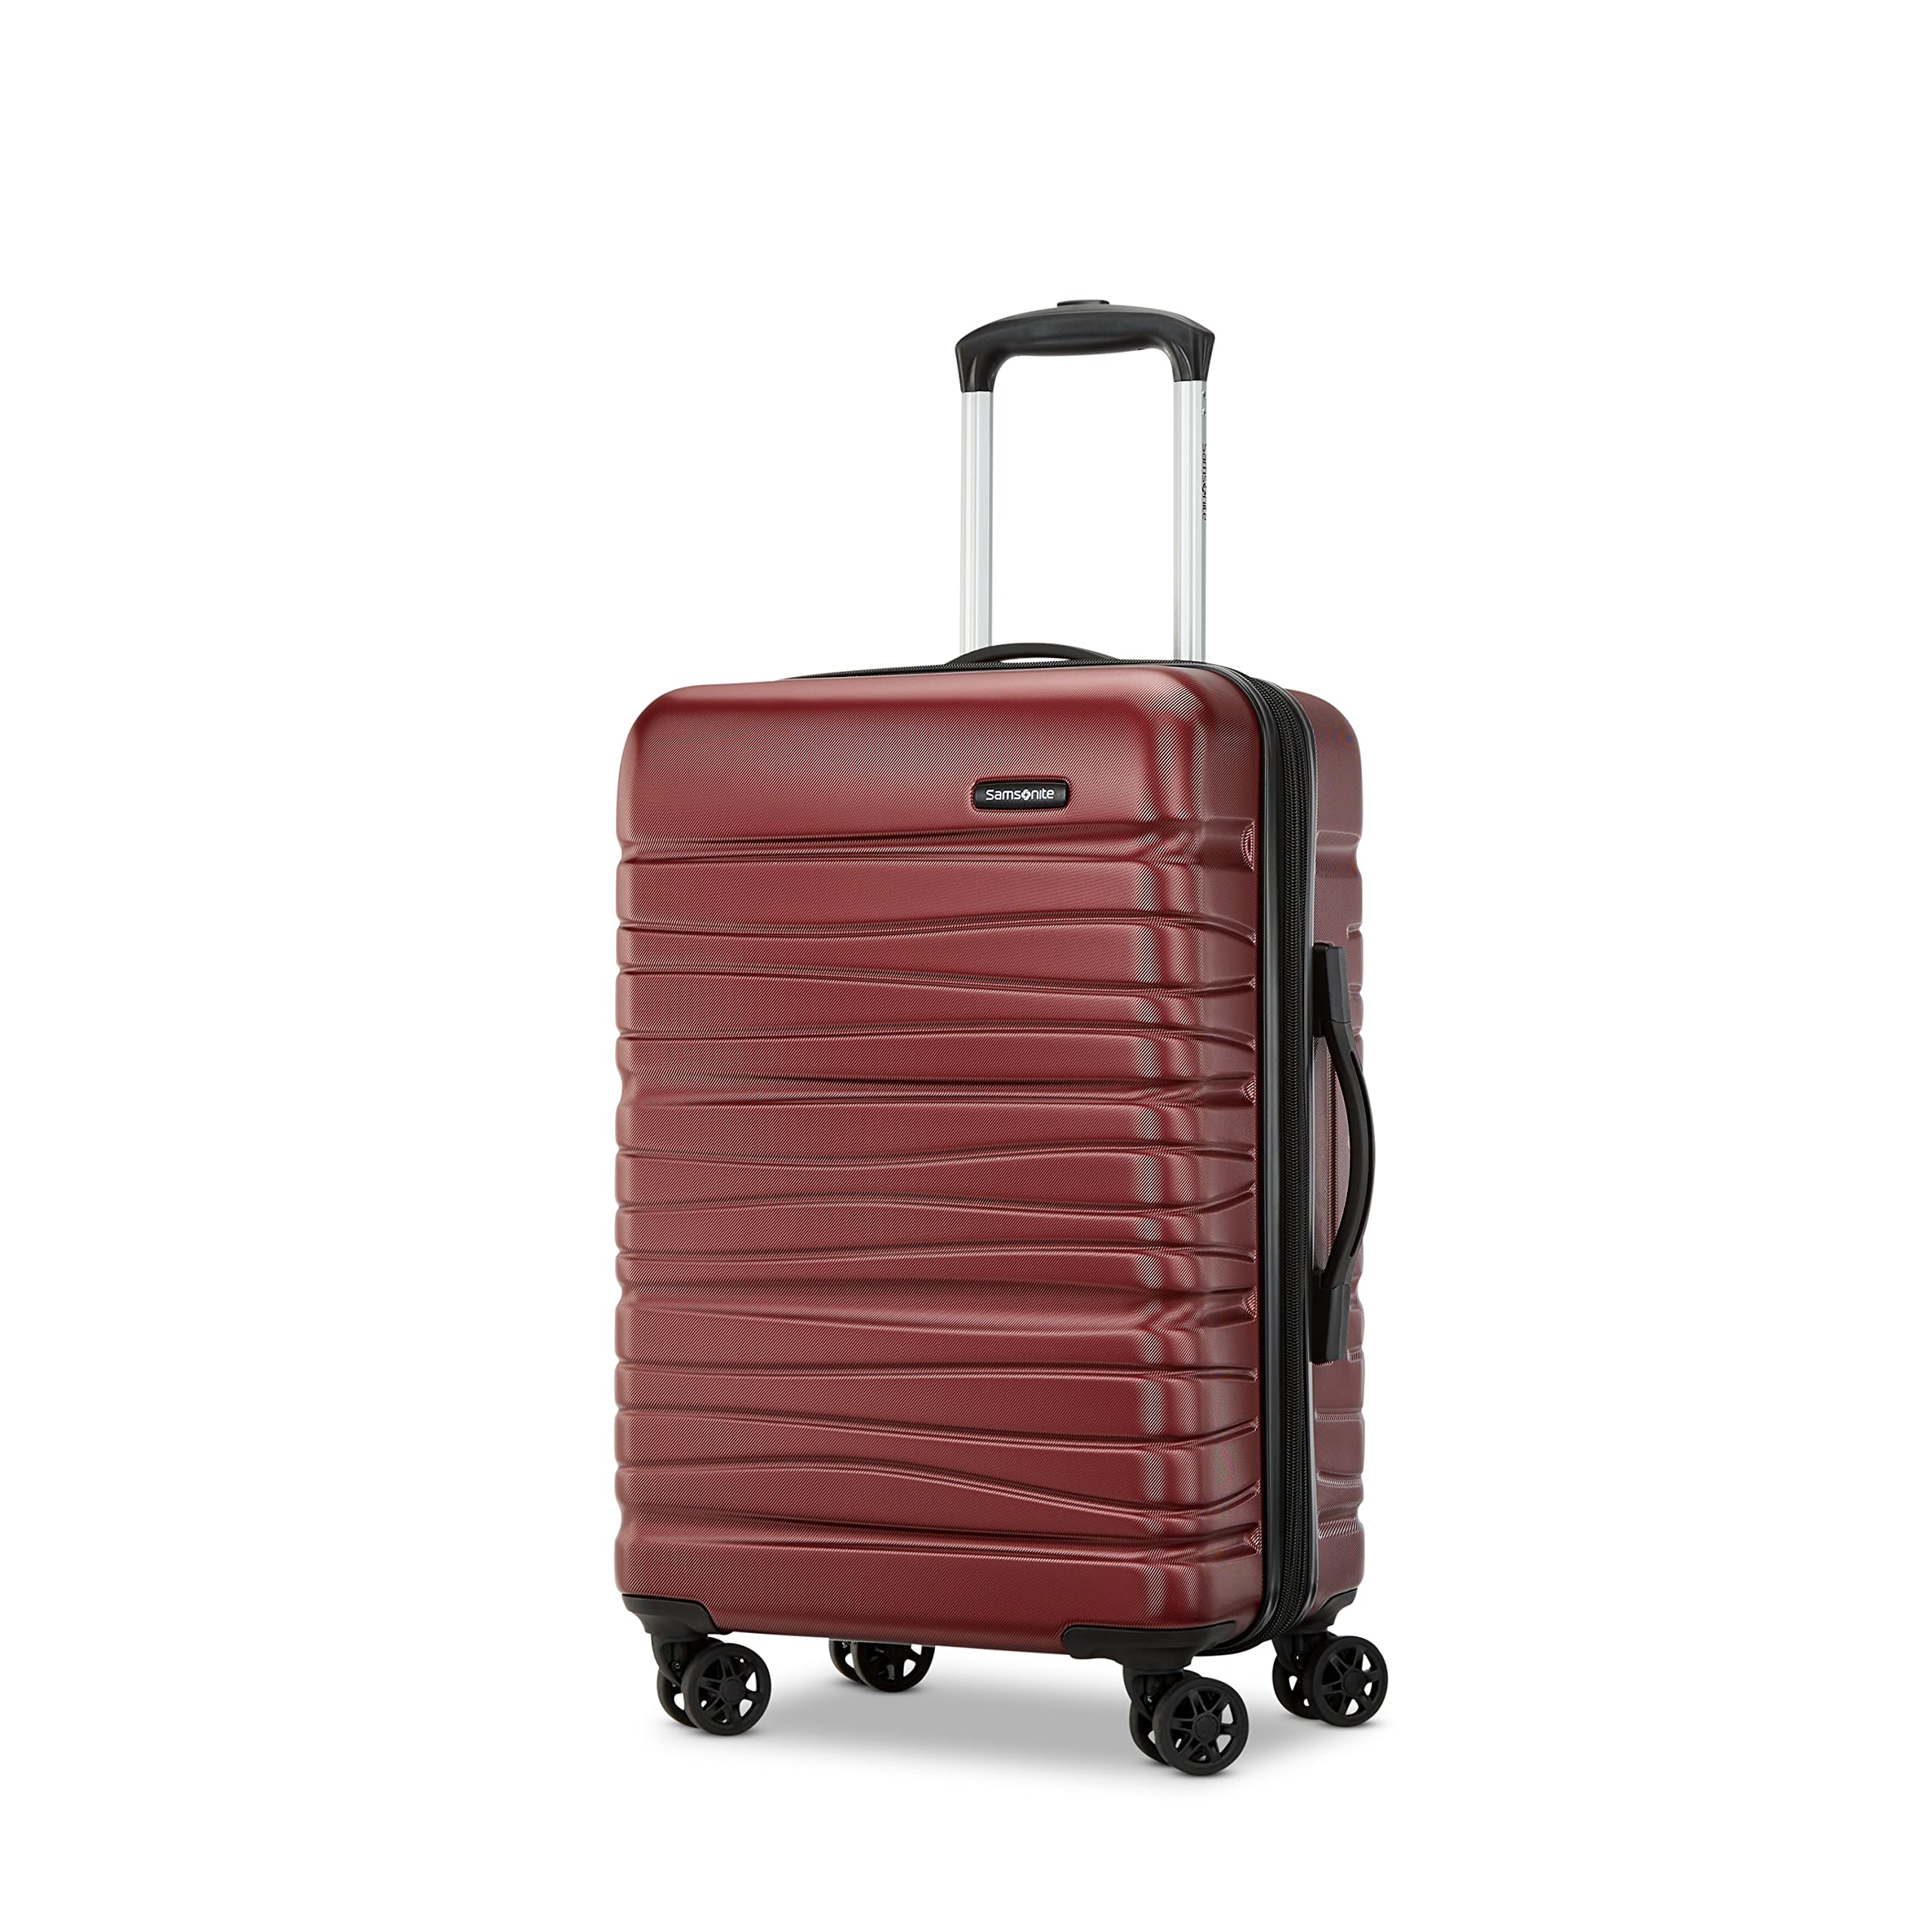 Samsonite Evolve SE Hardside Expandable Luggage with Spinners | Matt Burgundy | 2PC SET (Carry-on/Large)